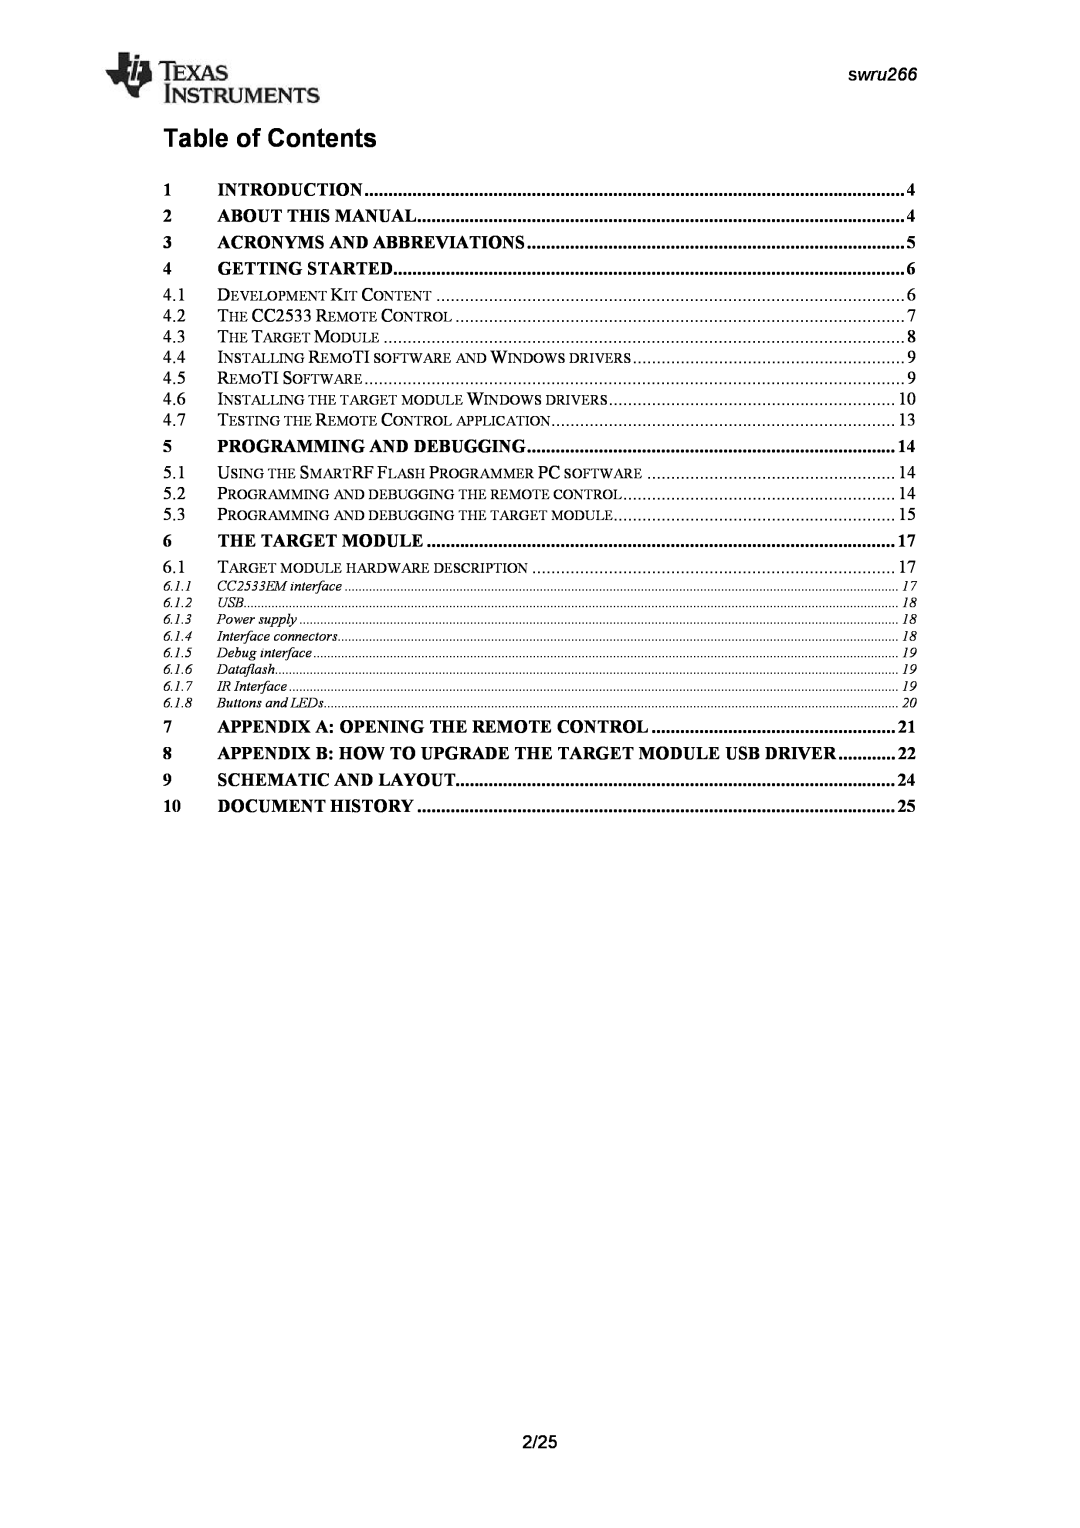 Texas Instruments CC2533 manual Table of Contents, swru266 